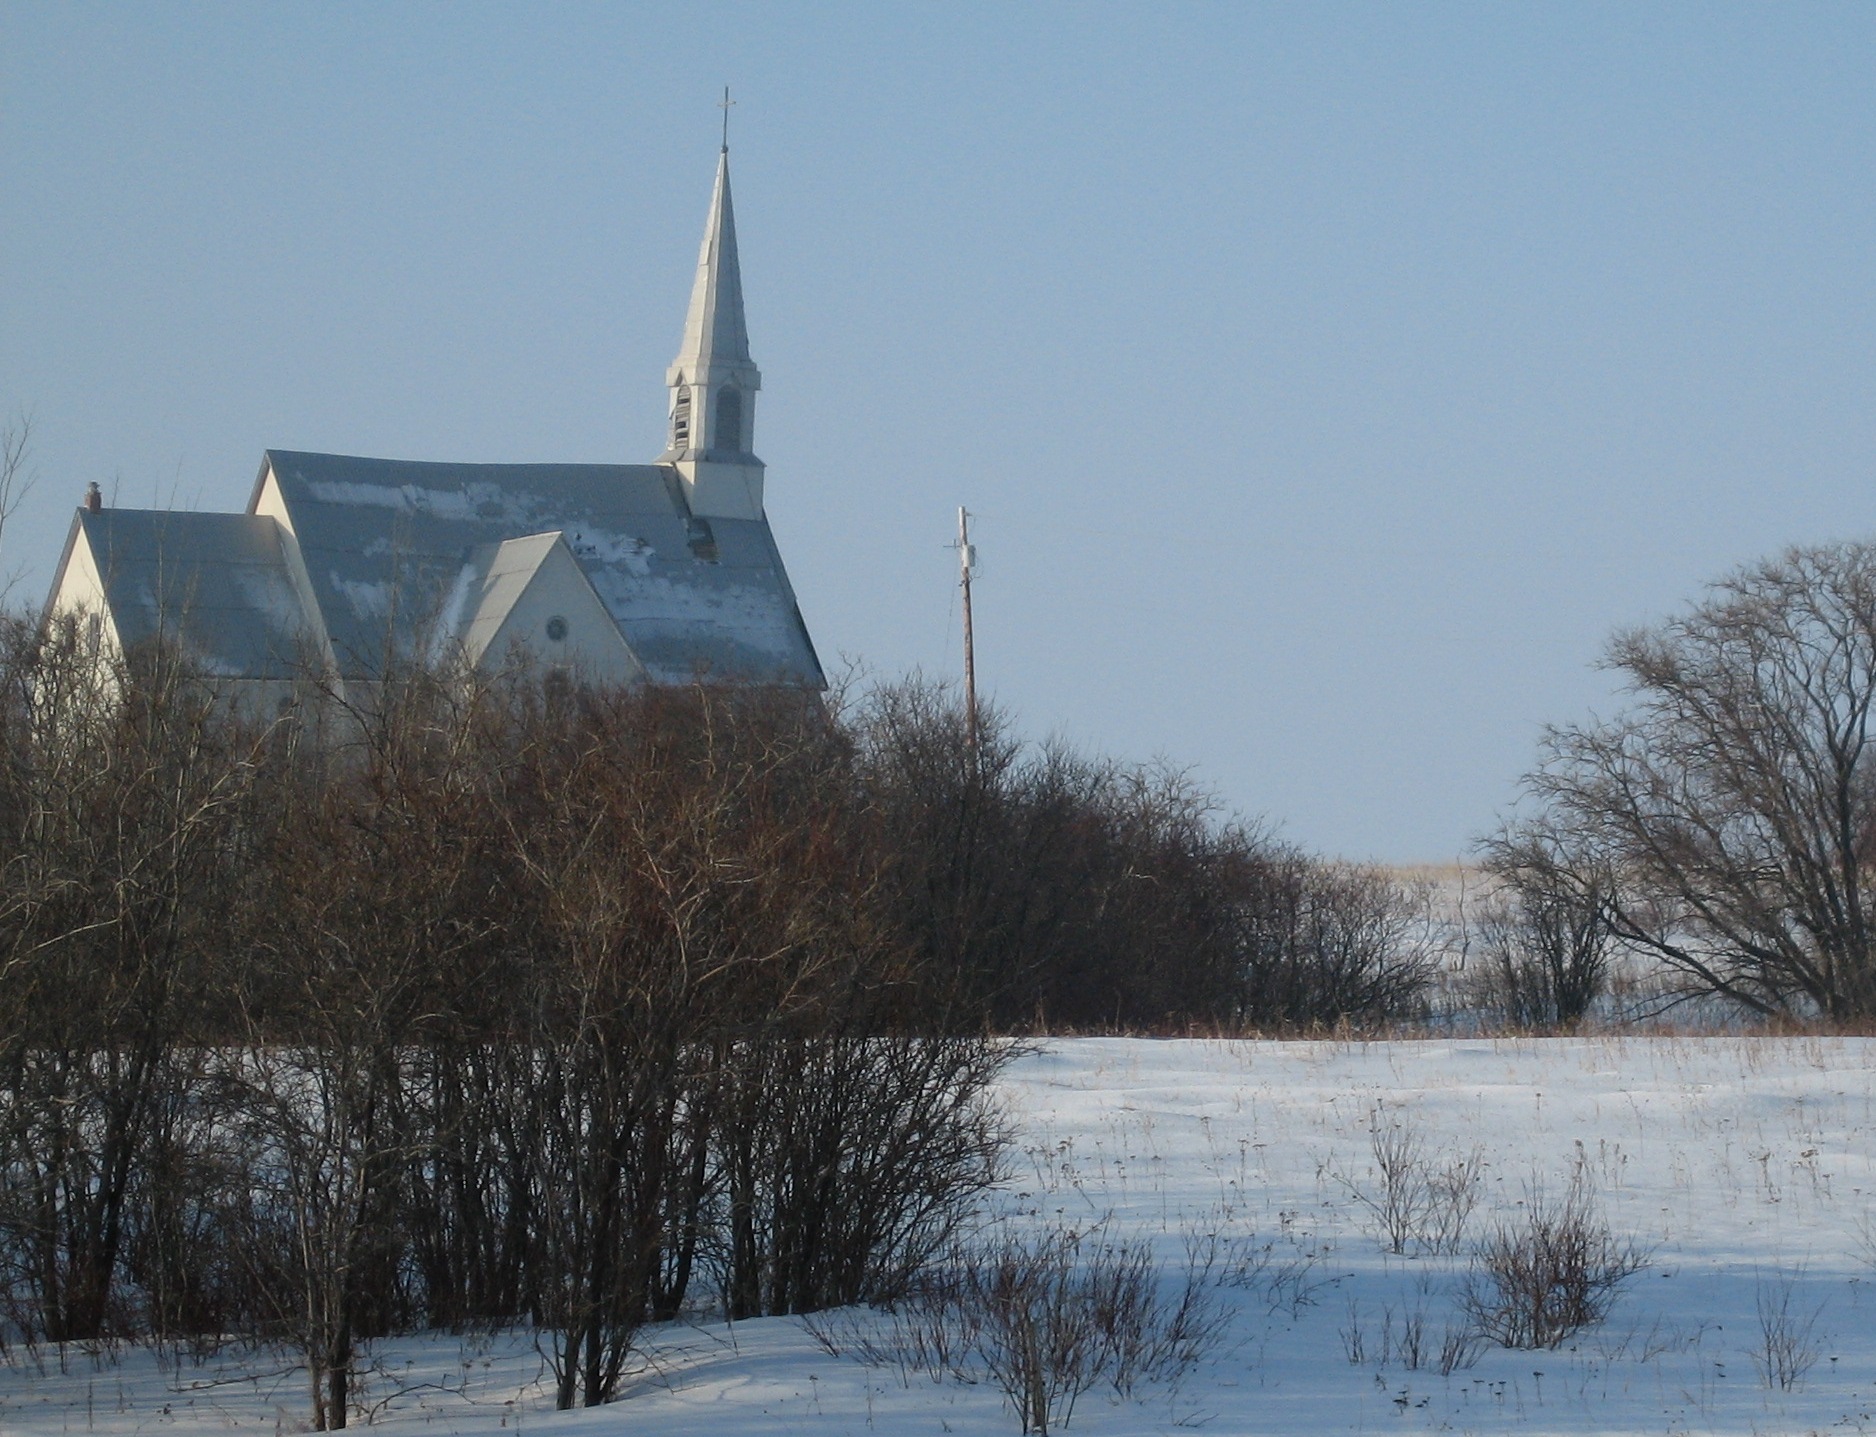 long lake 58 church in the winter